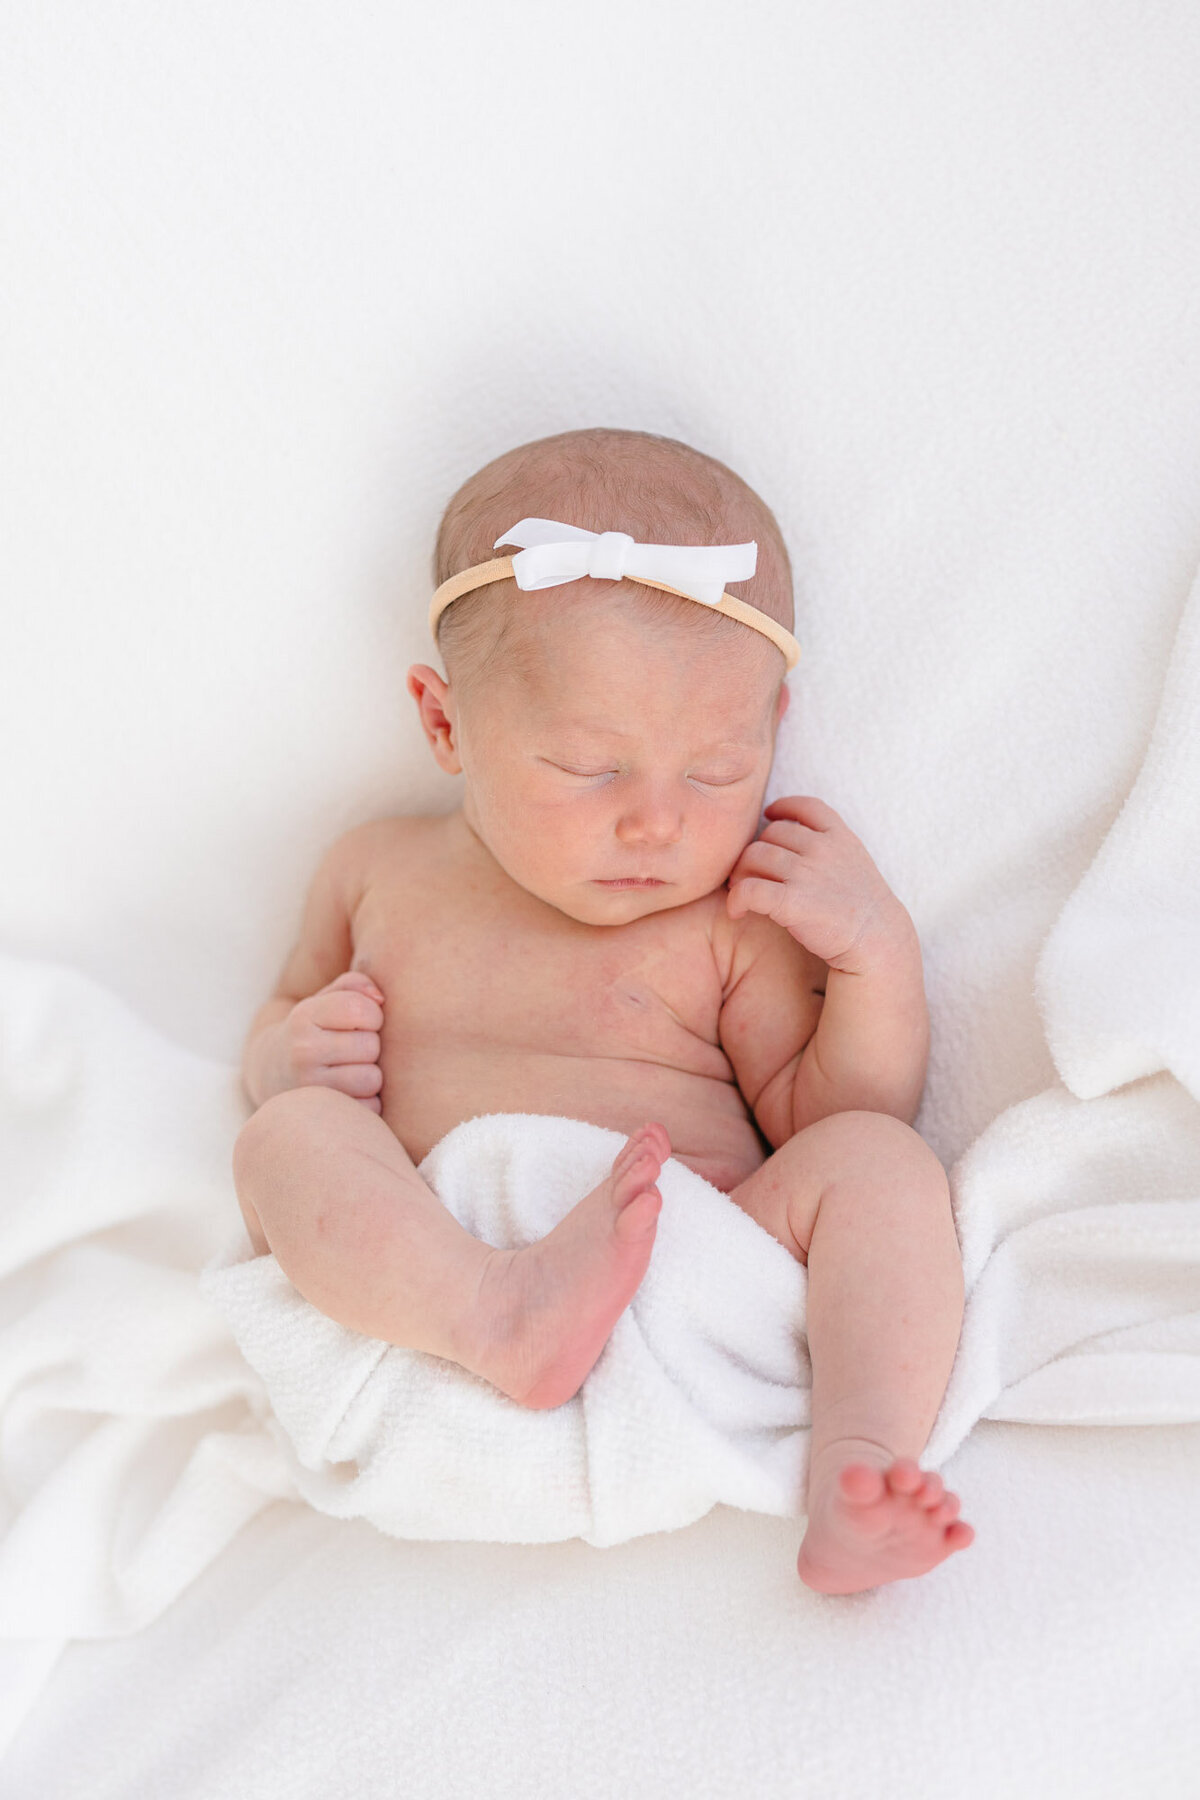 louisville-newborn-photographer-missy-marshall-10